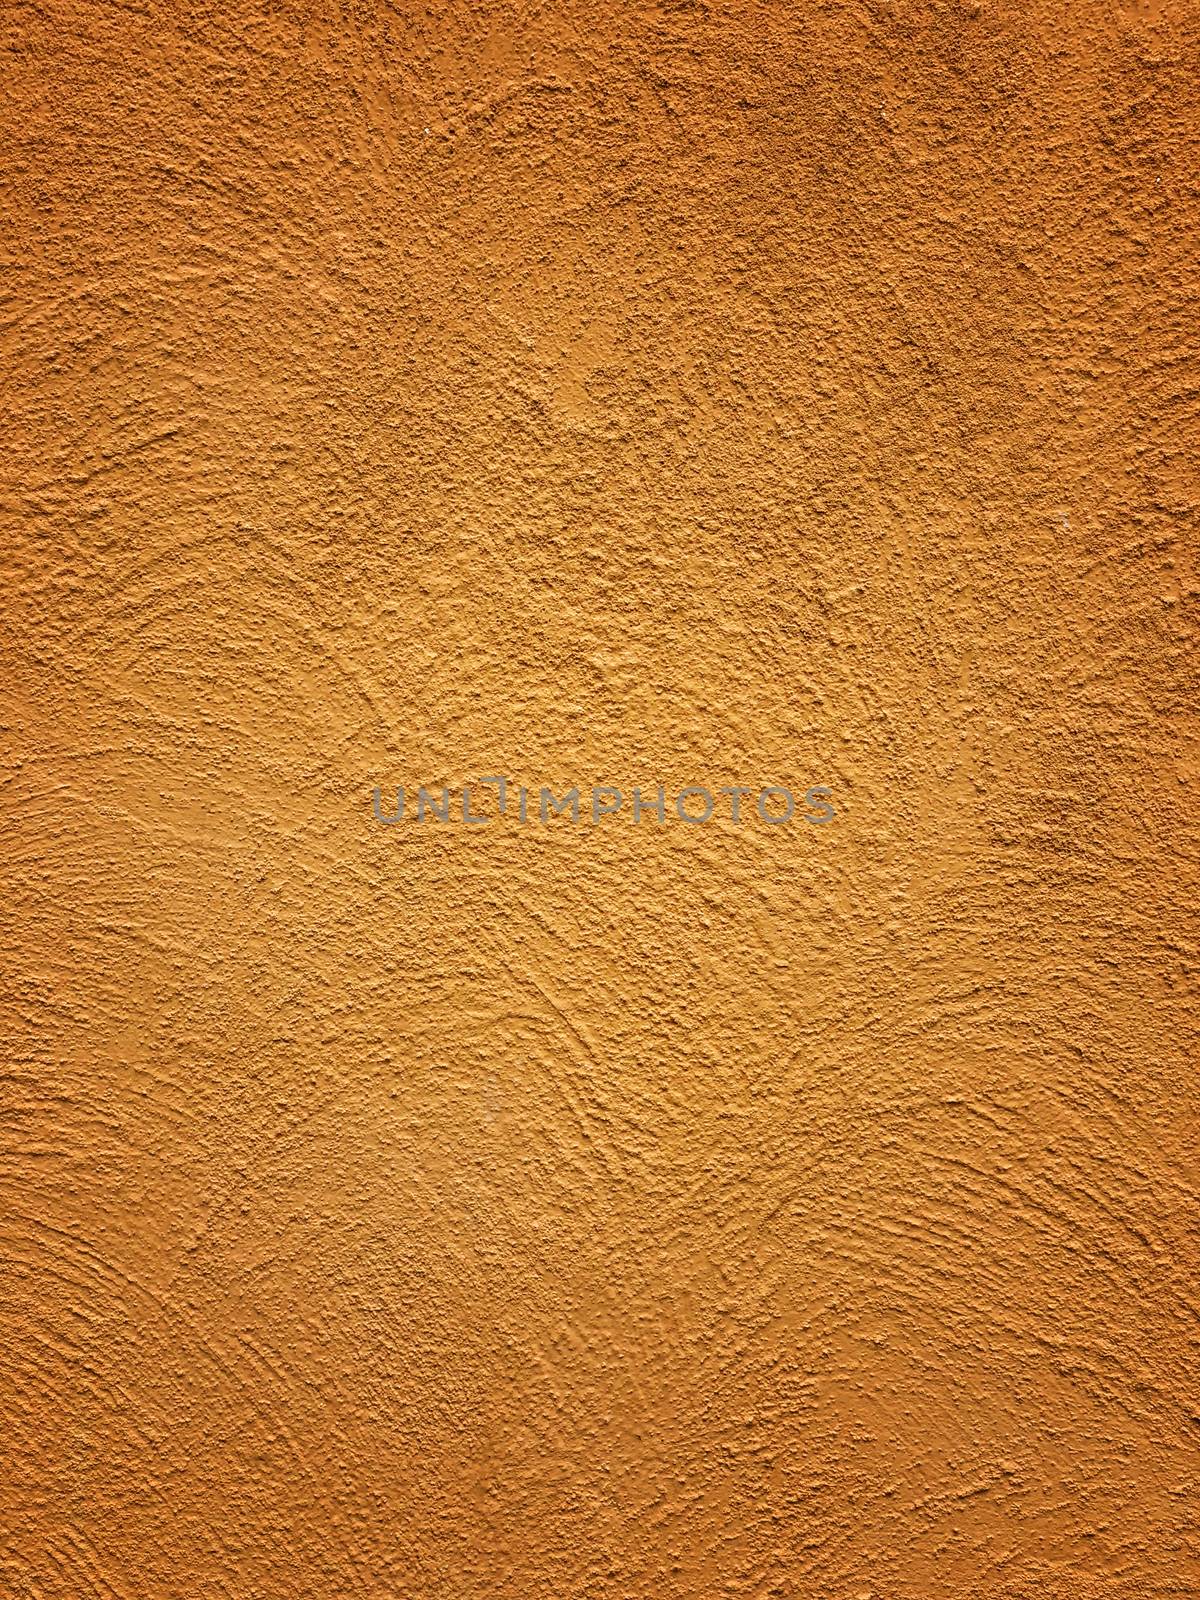 Orange cement wall detail and texture. by Surasak